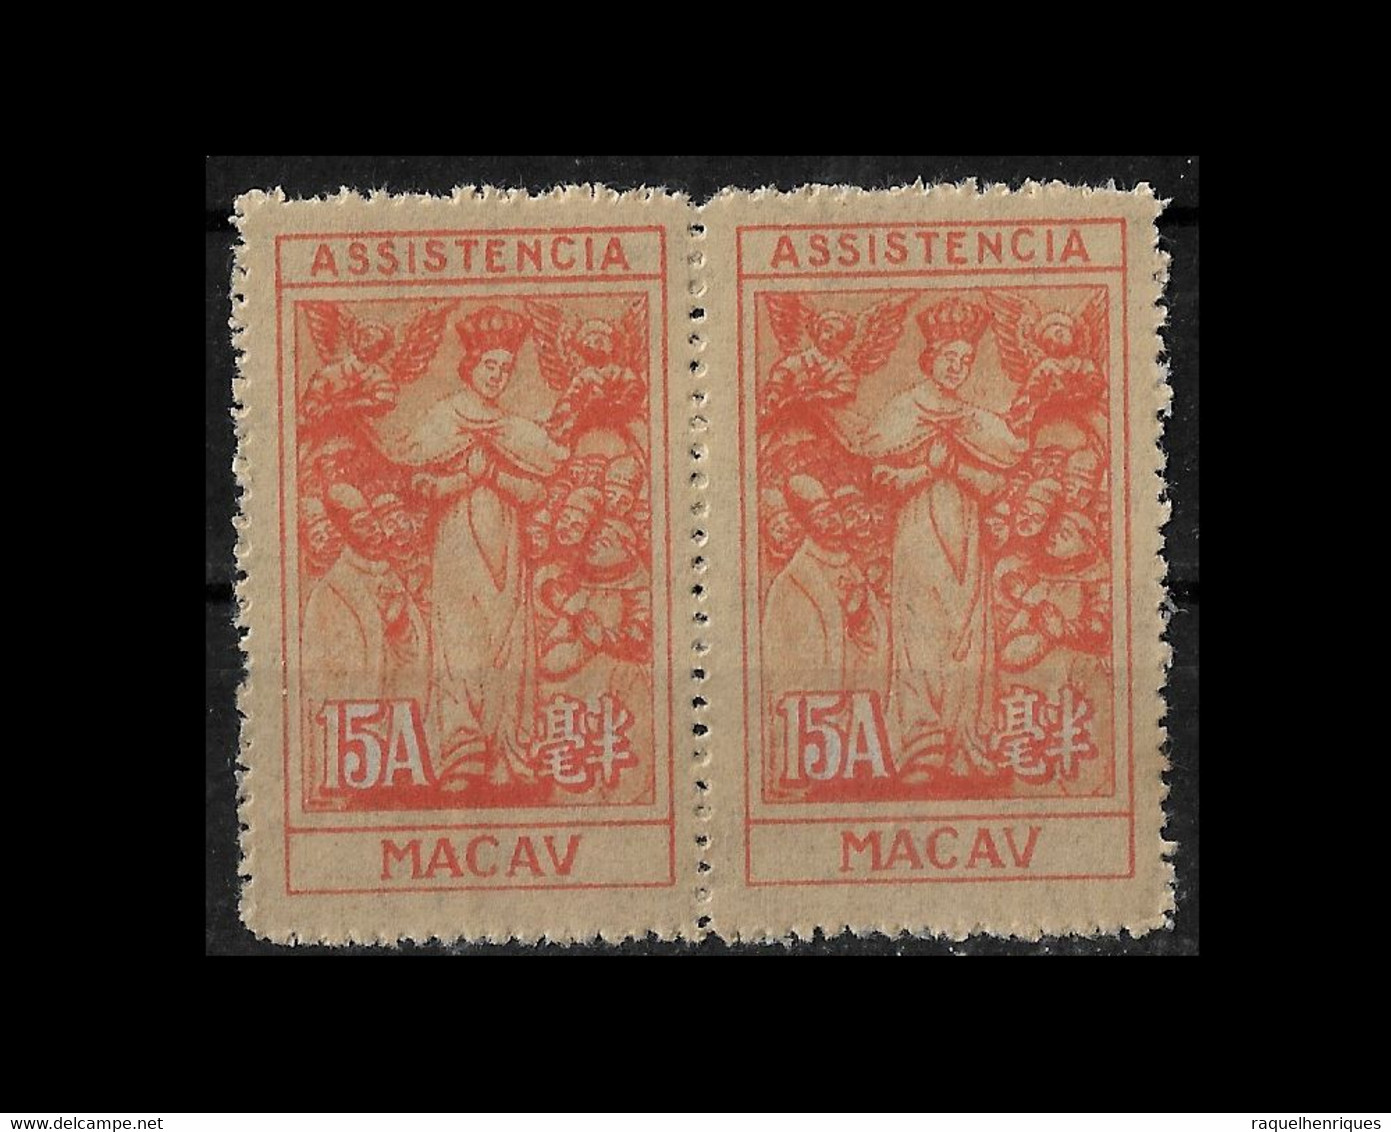 MACAU STAMP - 1945-47 Symbol Of Charity - Inscription "ASSISTENCIA" Perf:11 PAIR MNH (BA5#319) - Strafport